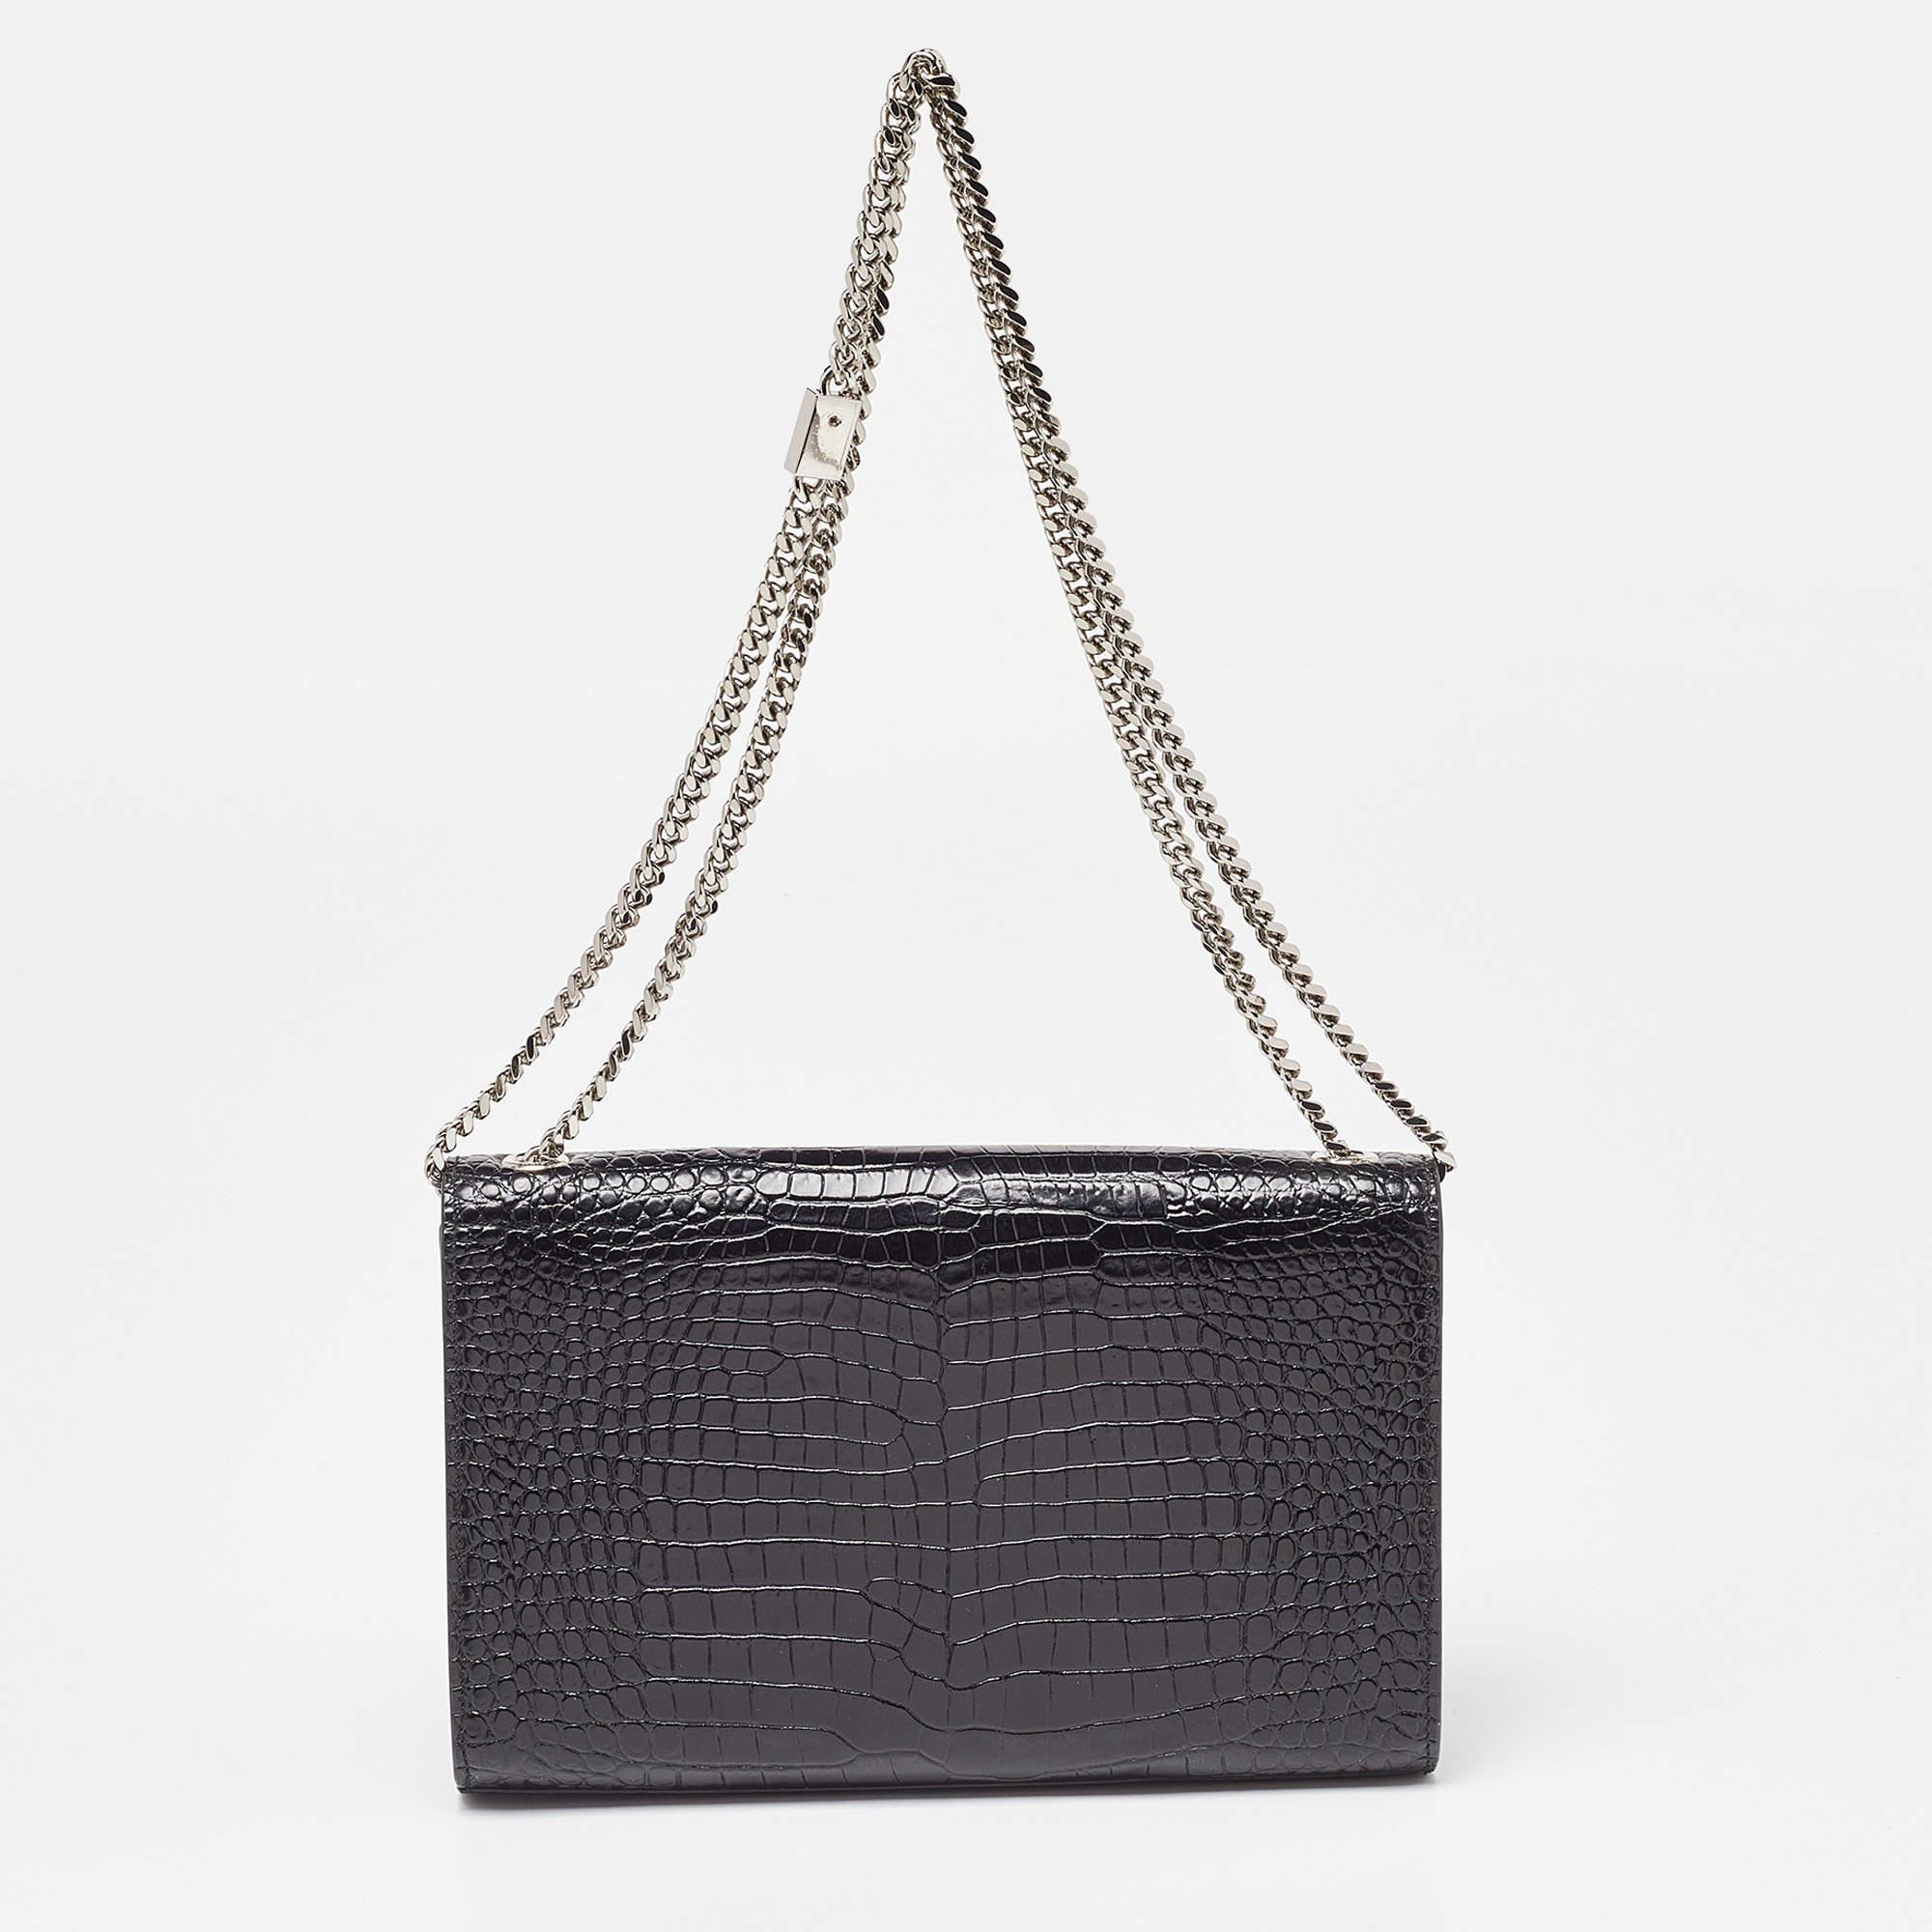 Saint Laurent Black Croc Embossed Leather Medium Kate Tassel Shoulder Bag 3